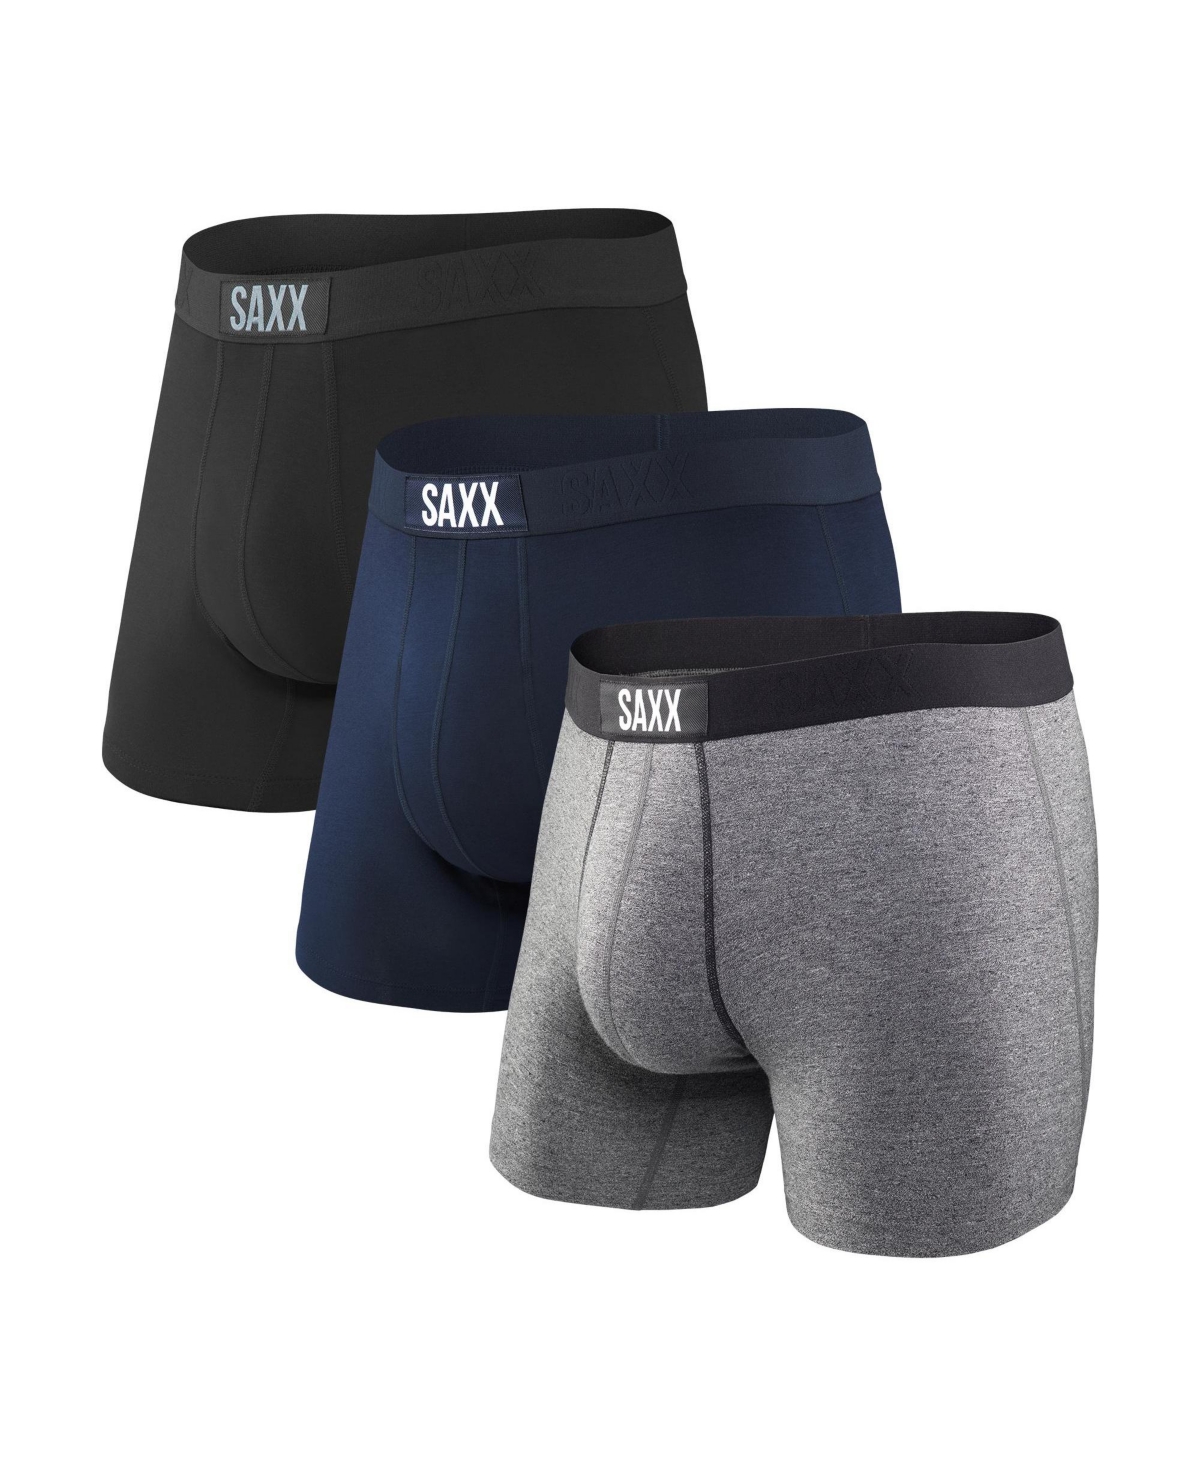 Men's Vibe Super Soft Slim Fit Boxer Brief, 3 Pk. - Black, Grey, Navy